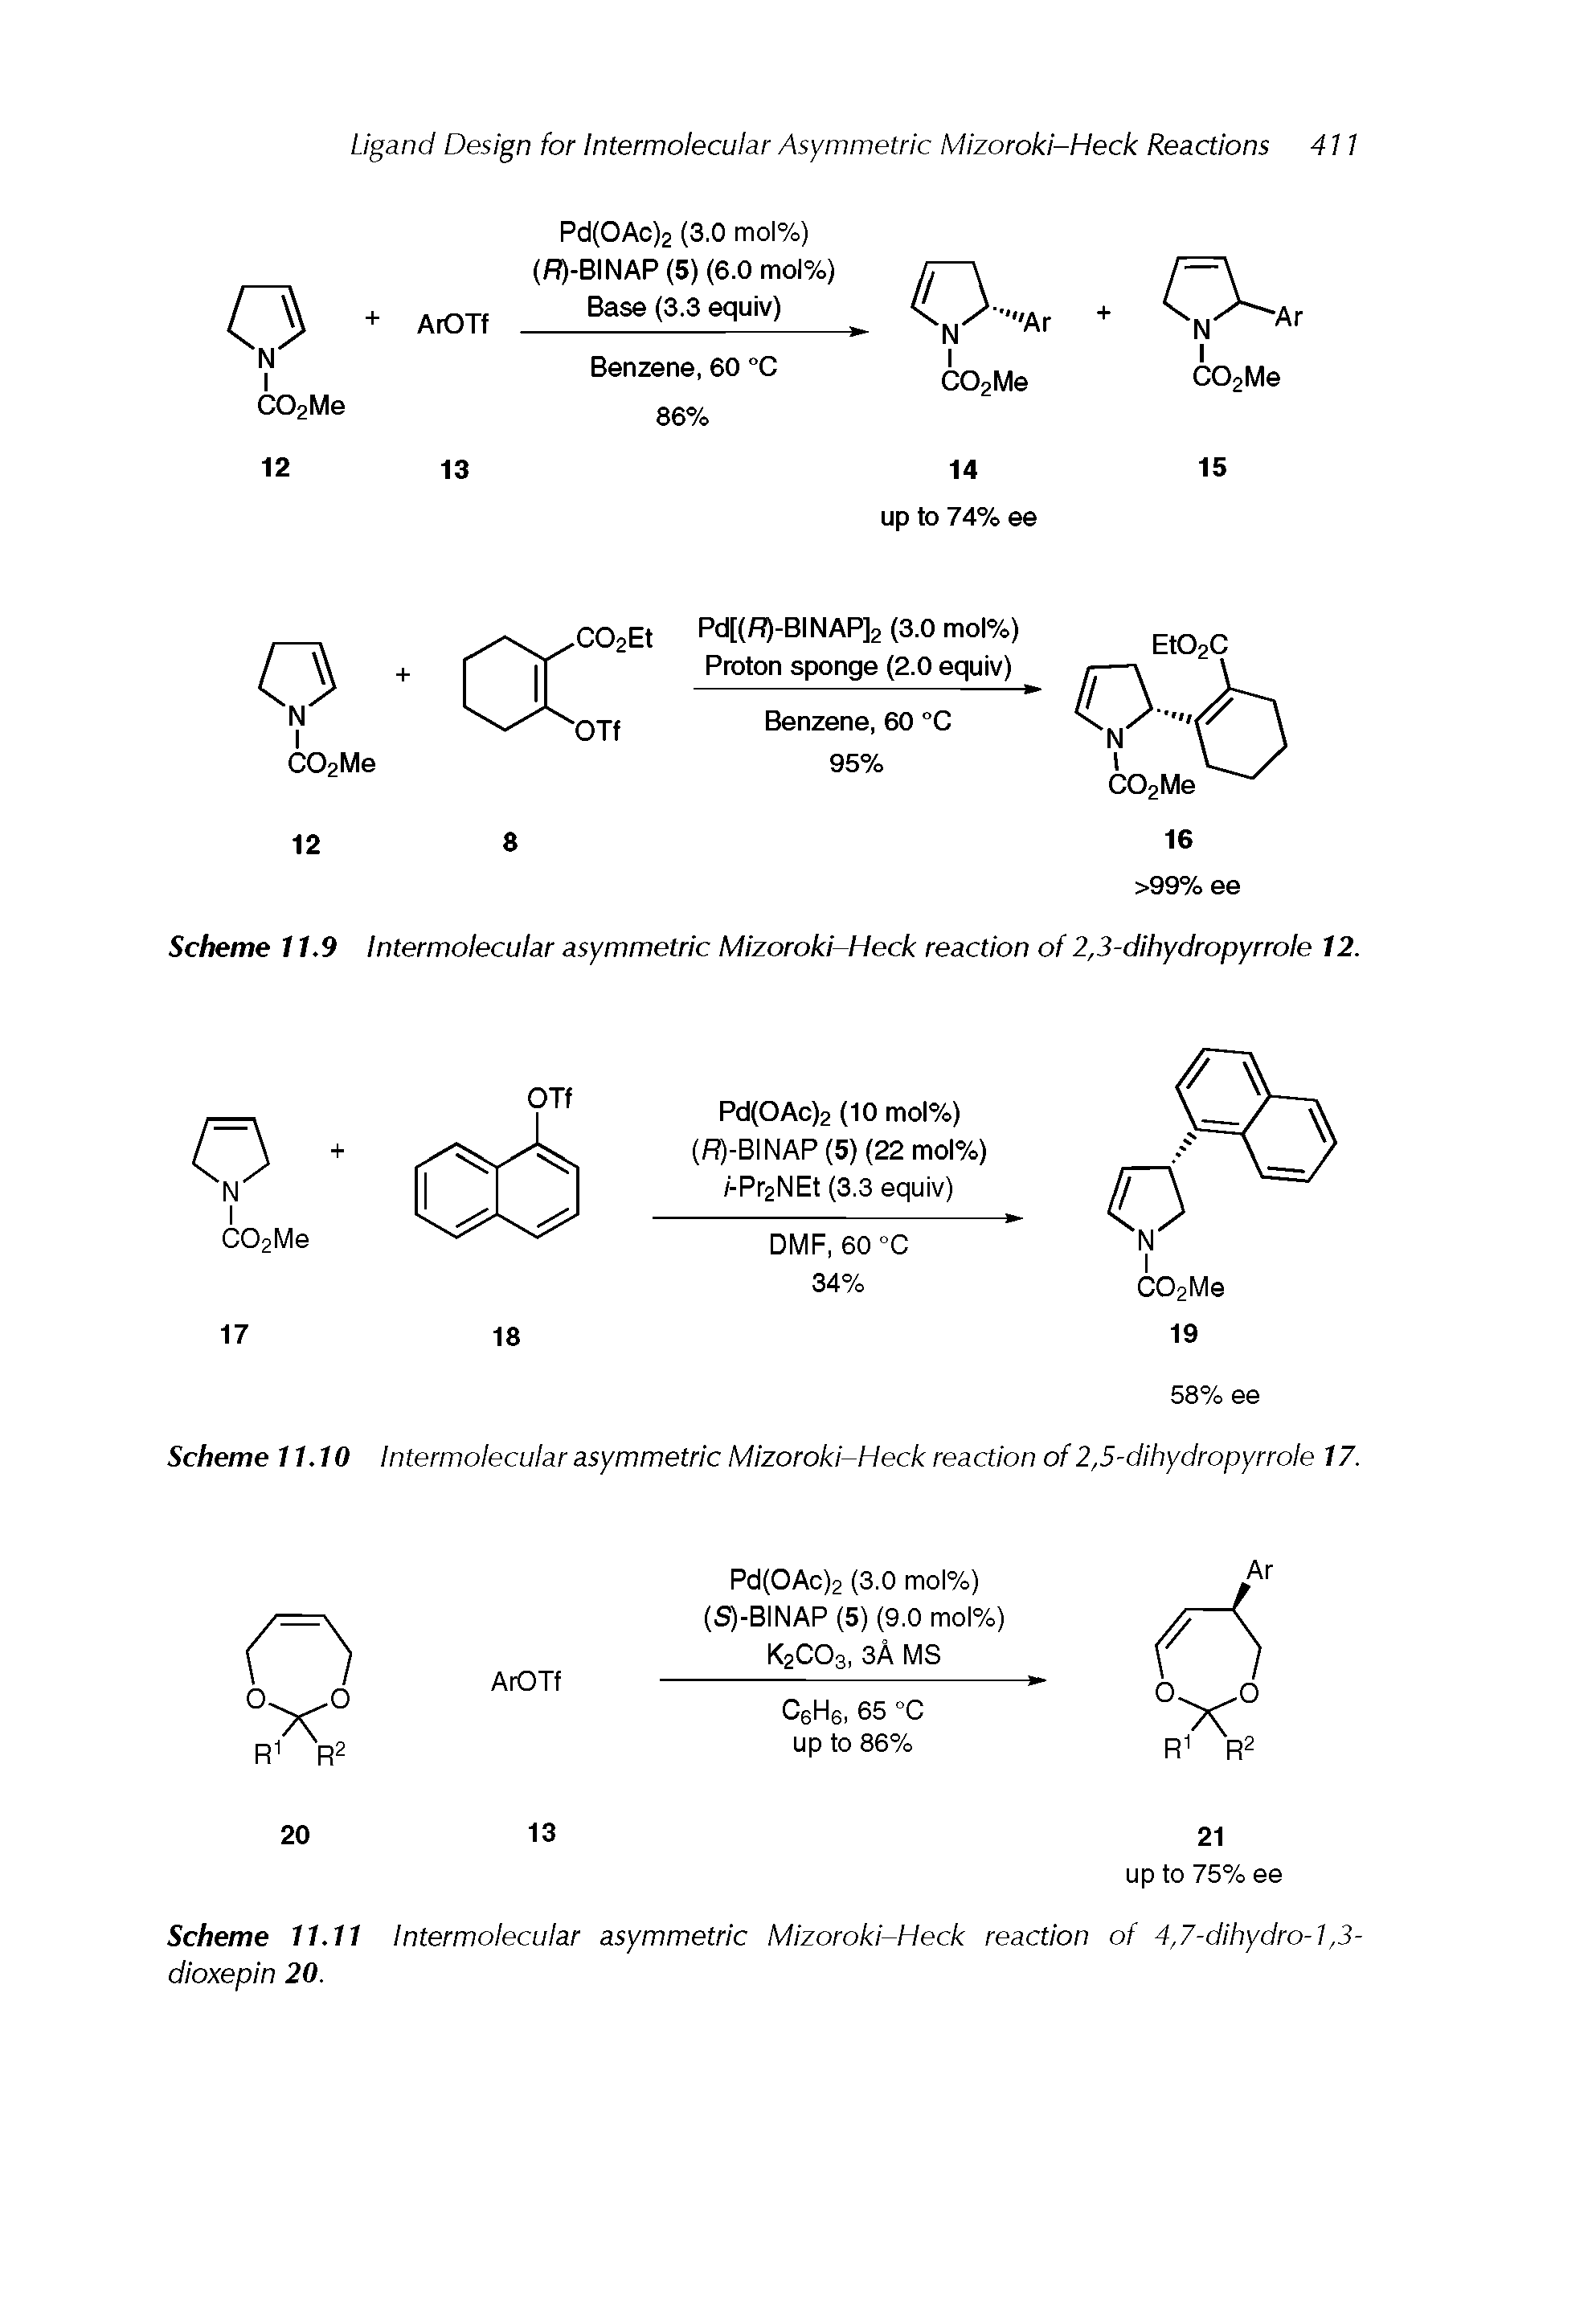 Scheme 11.9 Intermolecular asymmetric Mizoroki-Heck reaction of 2,3-dihydropyrrole 12.